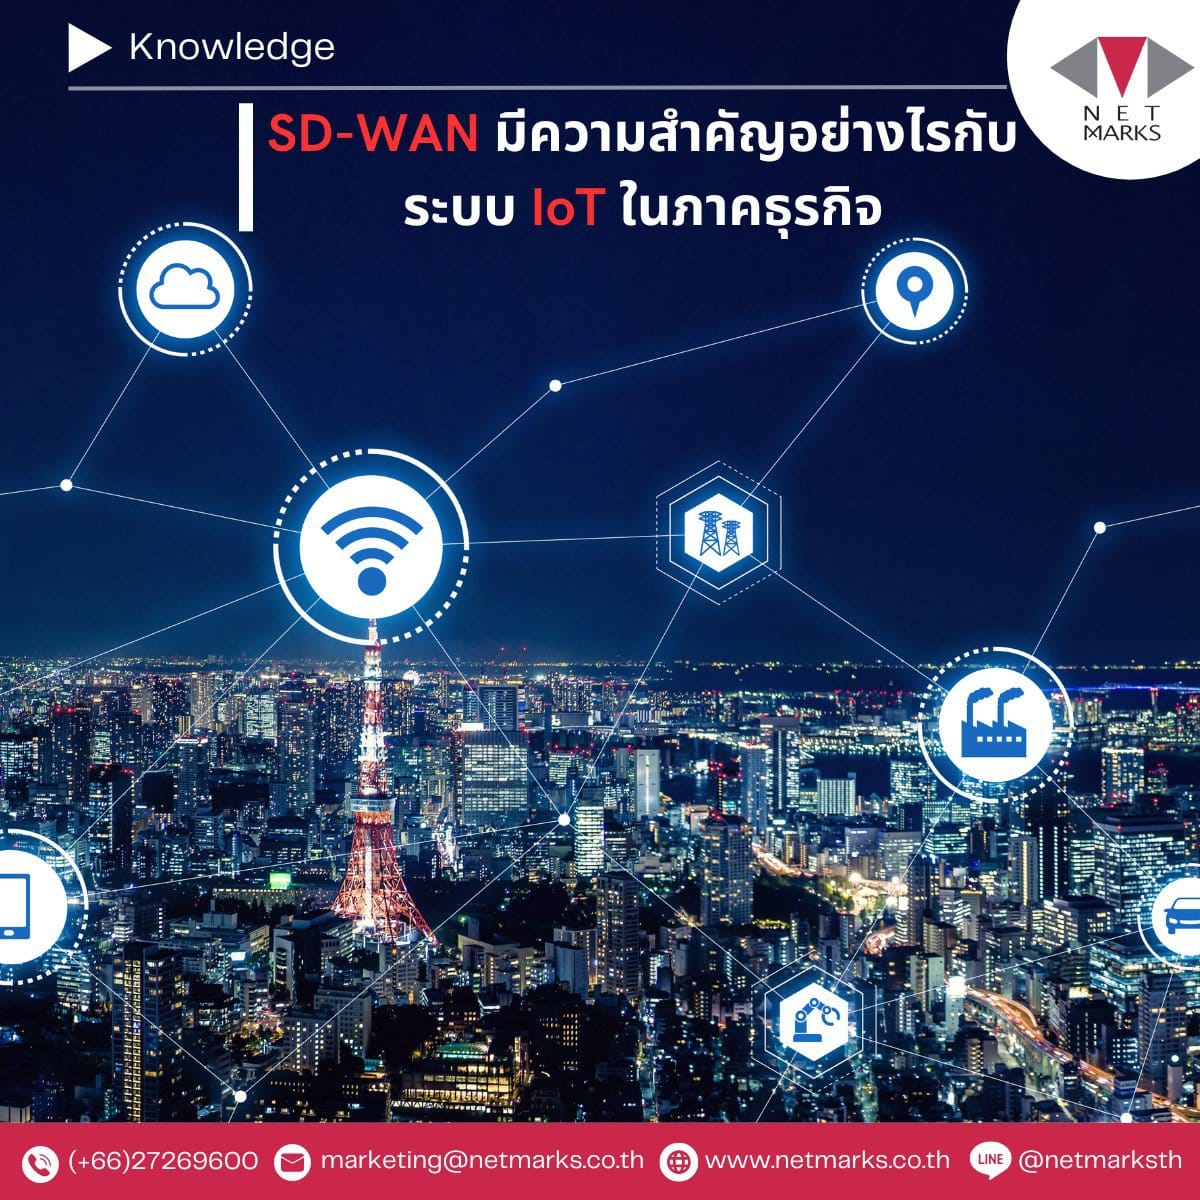 SD-WAN เป็นเทคโนโลยีที่ช่วยธุรกิจในการจัดการระบบและเครือข่ายโดยอัตโนมัติ โดยเชื่อมต่อผู้ใช้ระยะไกลในสาขาต่างๆ อย่างปลอดภัย